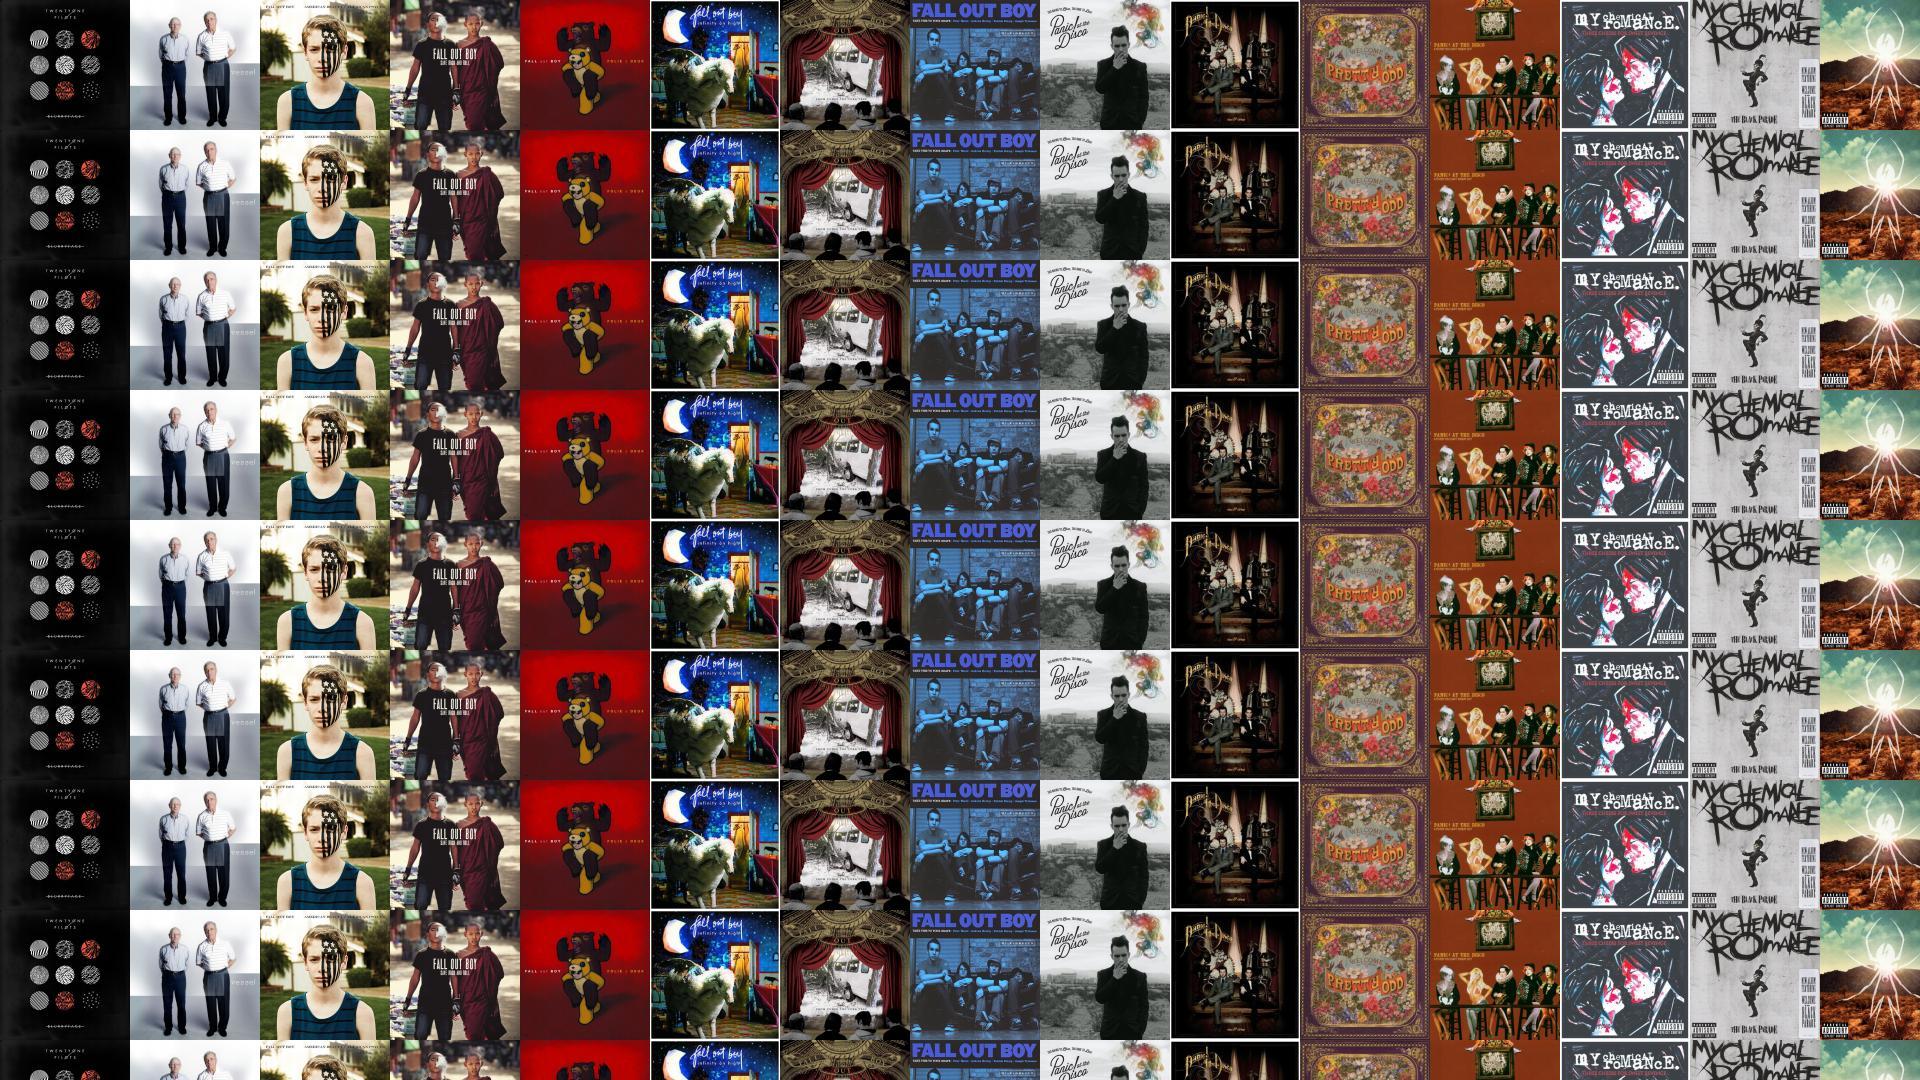 Fall Out Boy Wallpaper - Fall Out Boy Mania - HD Wallpaper 